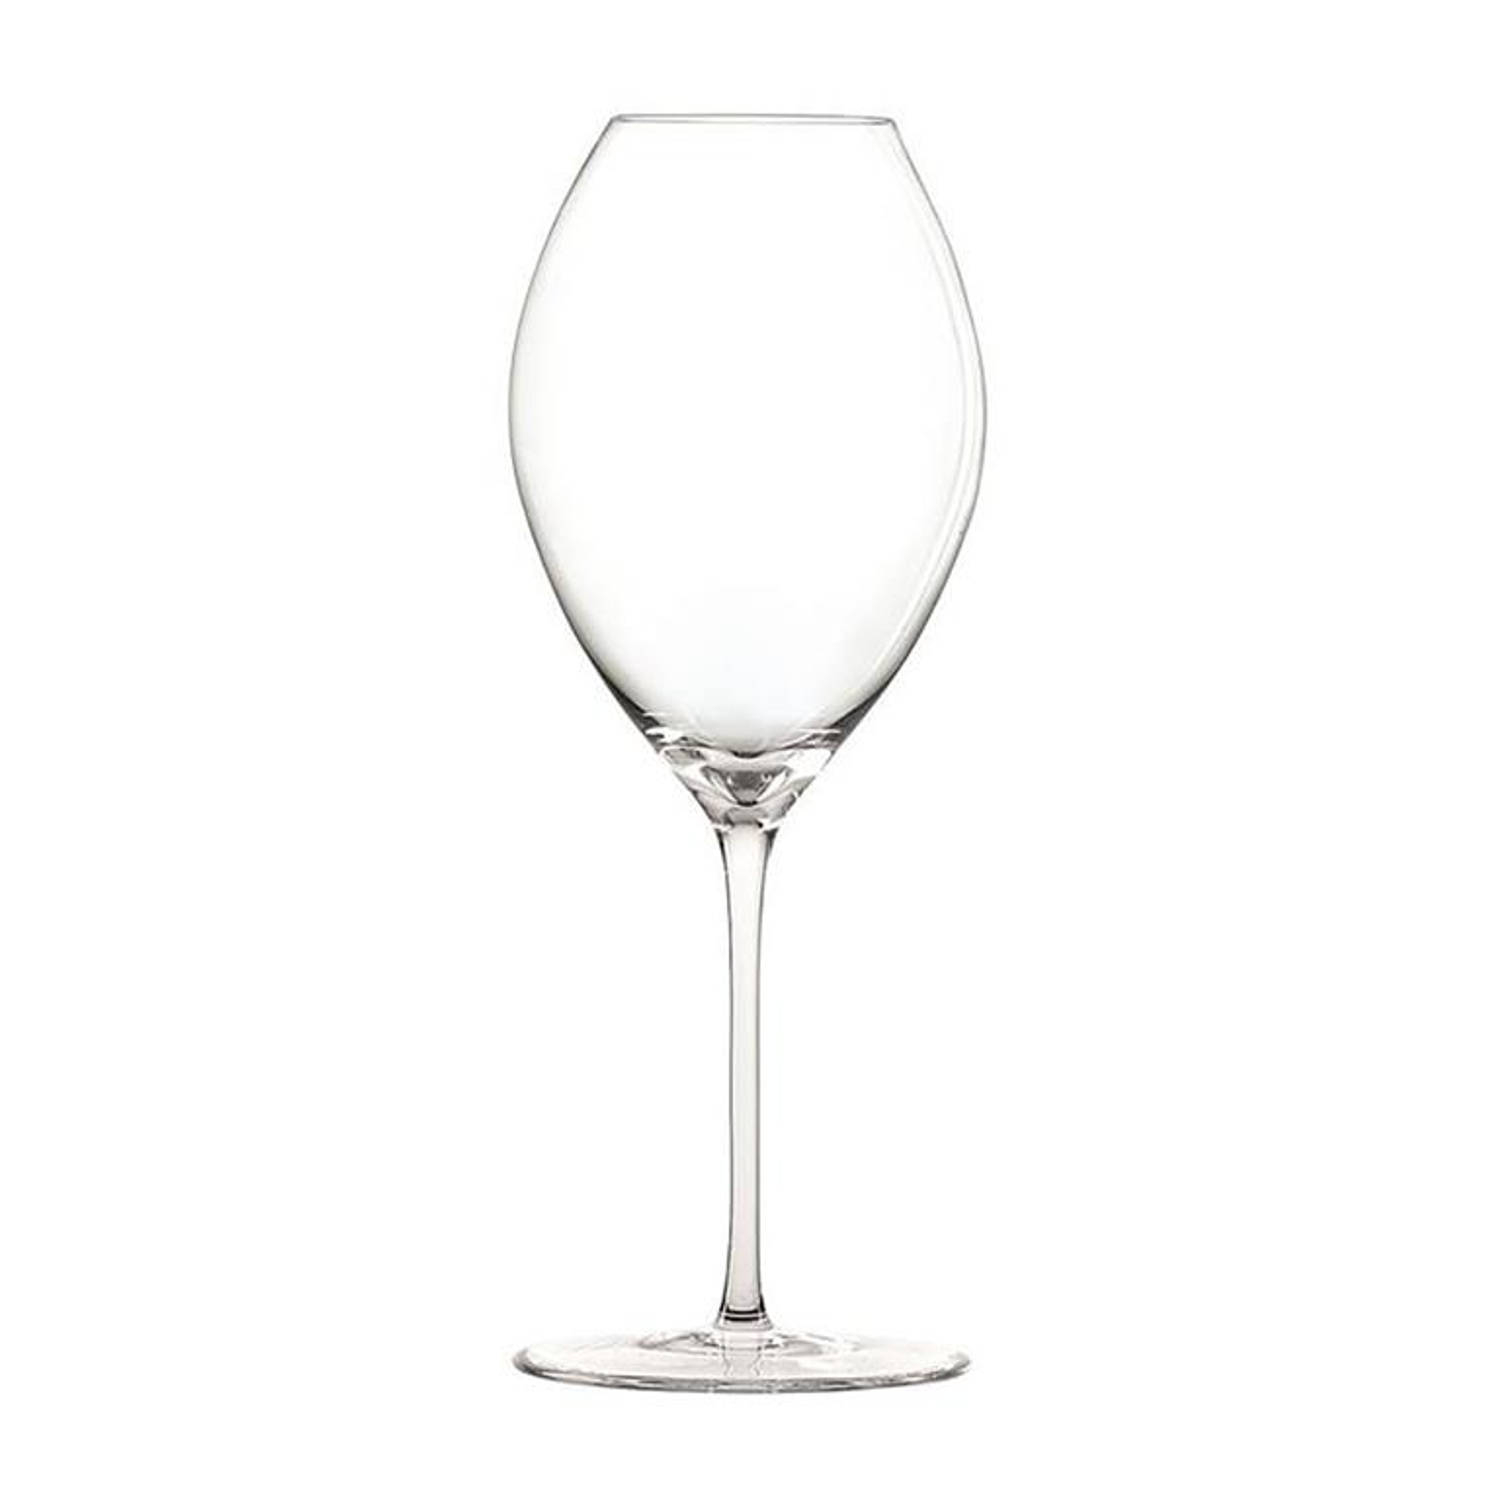 Geloofsbelijdenis Autorisatie apotheker Spiegelau - Witte wijnglas ïNovoï, 480 ml | Blokker